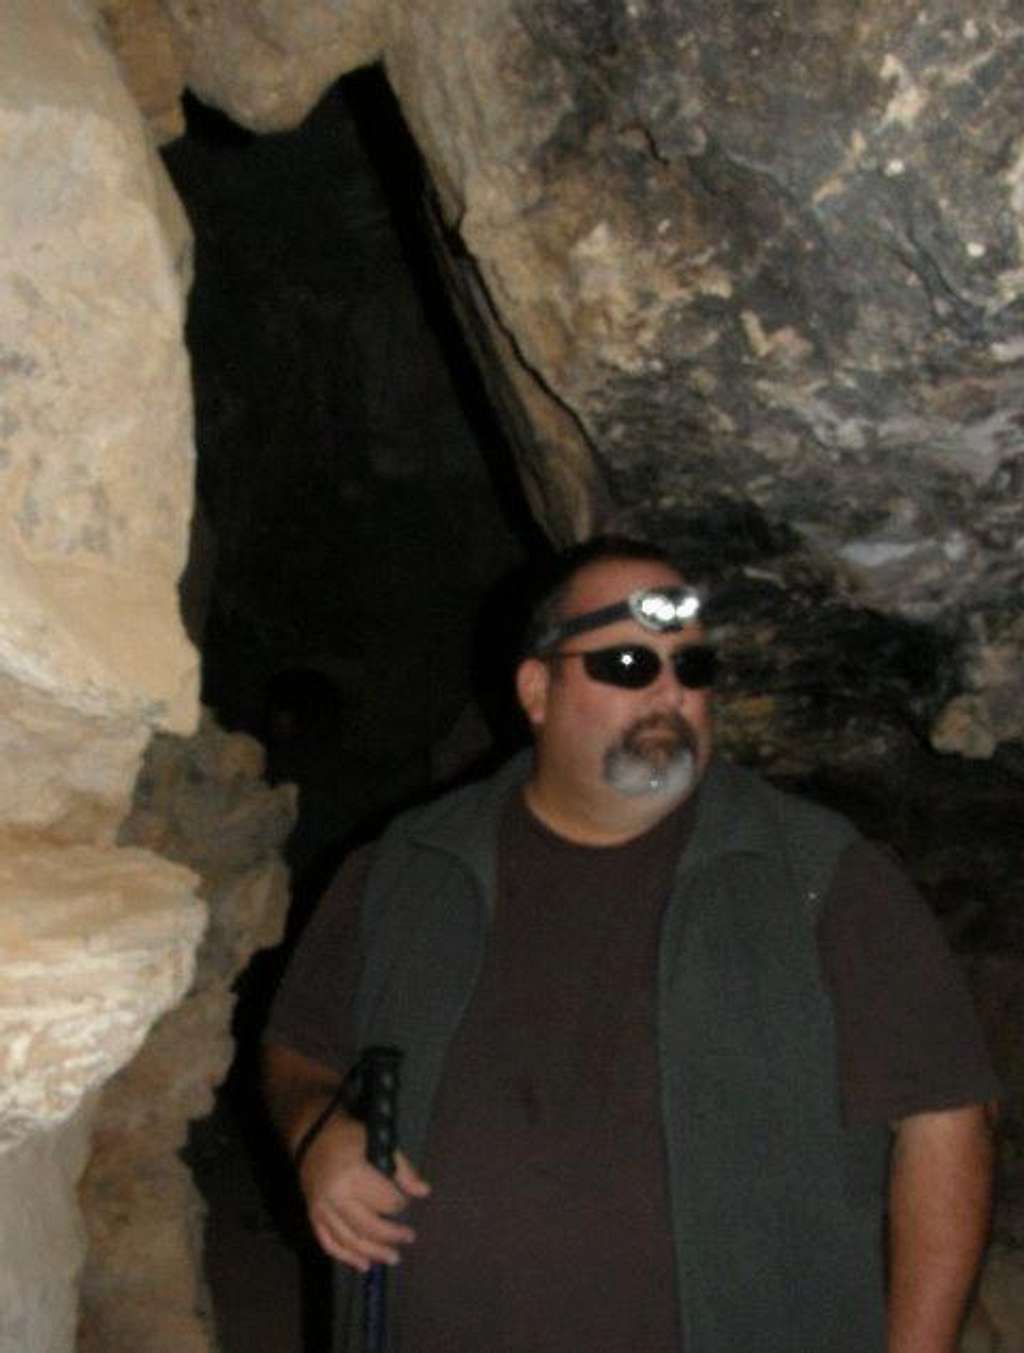 Sunglasses in a cave?